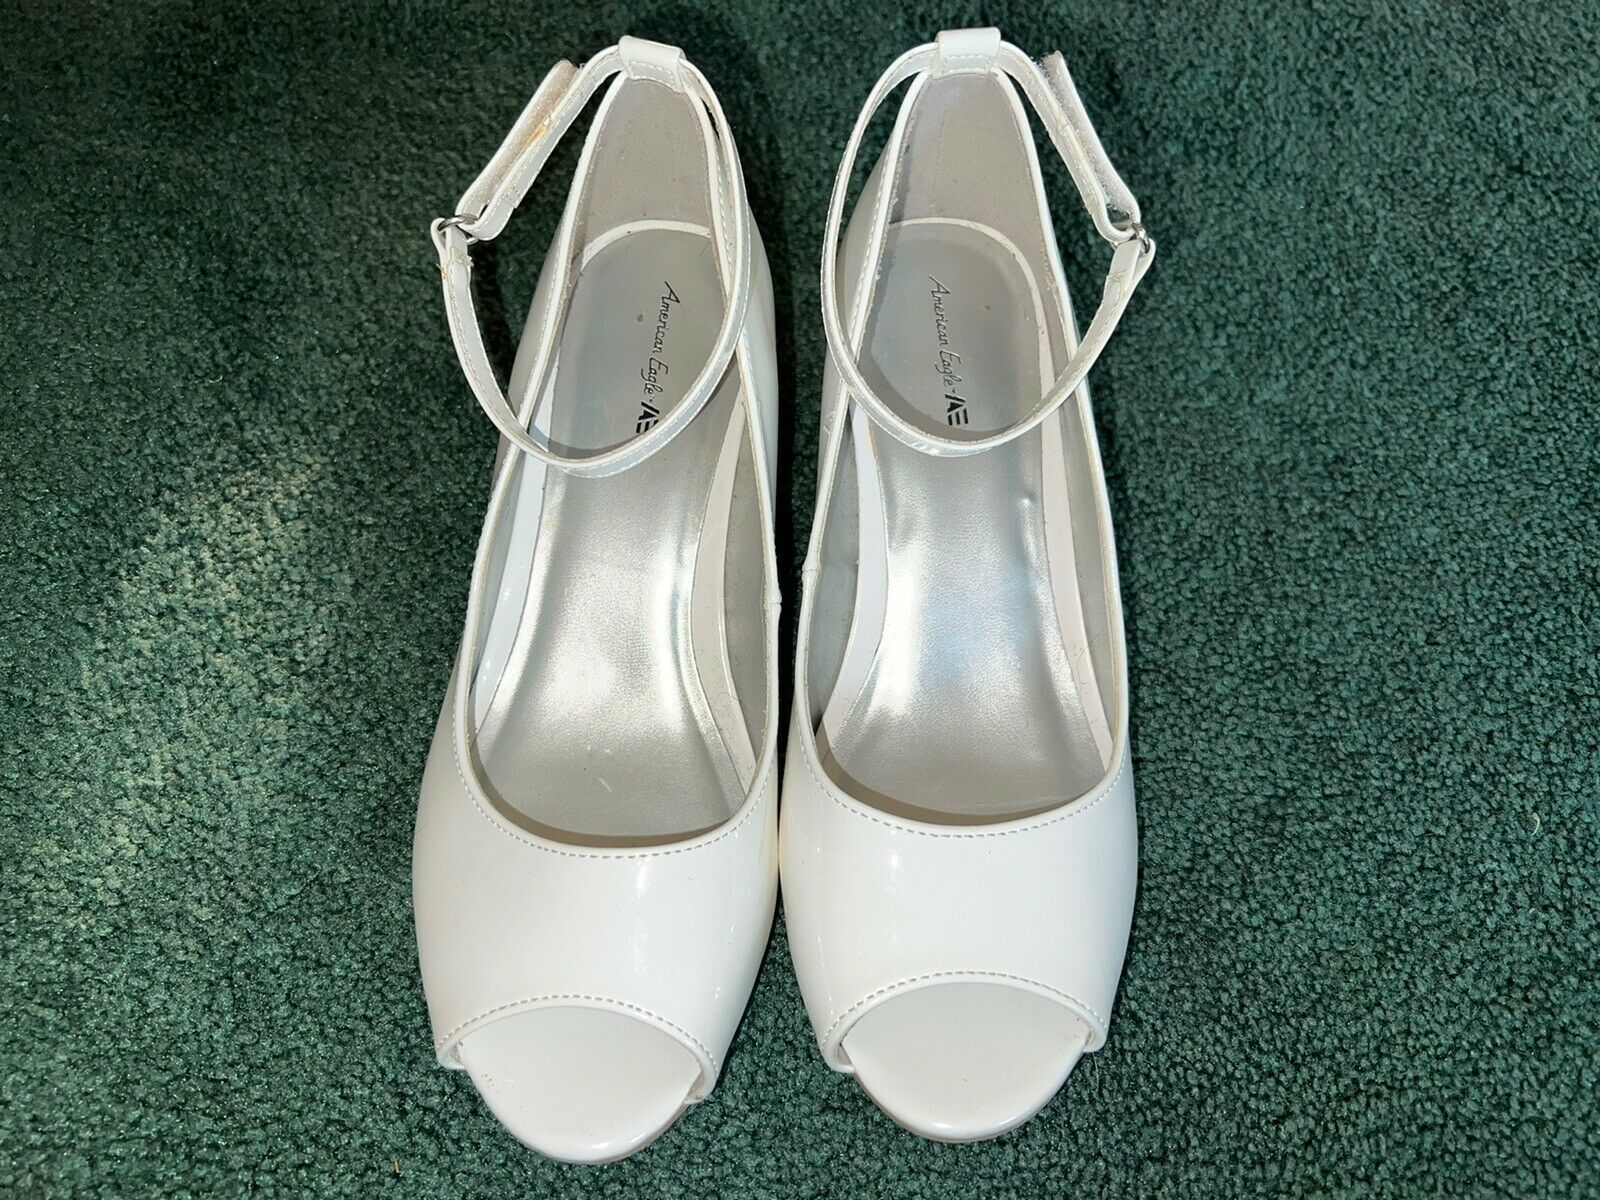 White Girls Dress Shoes size 3 1/2